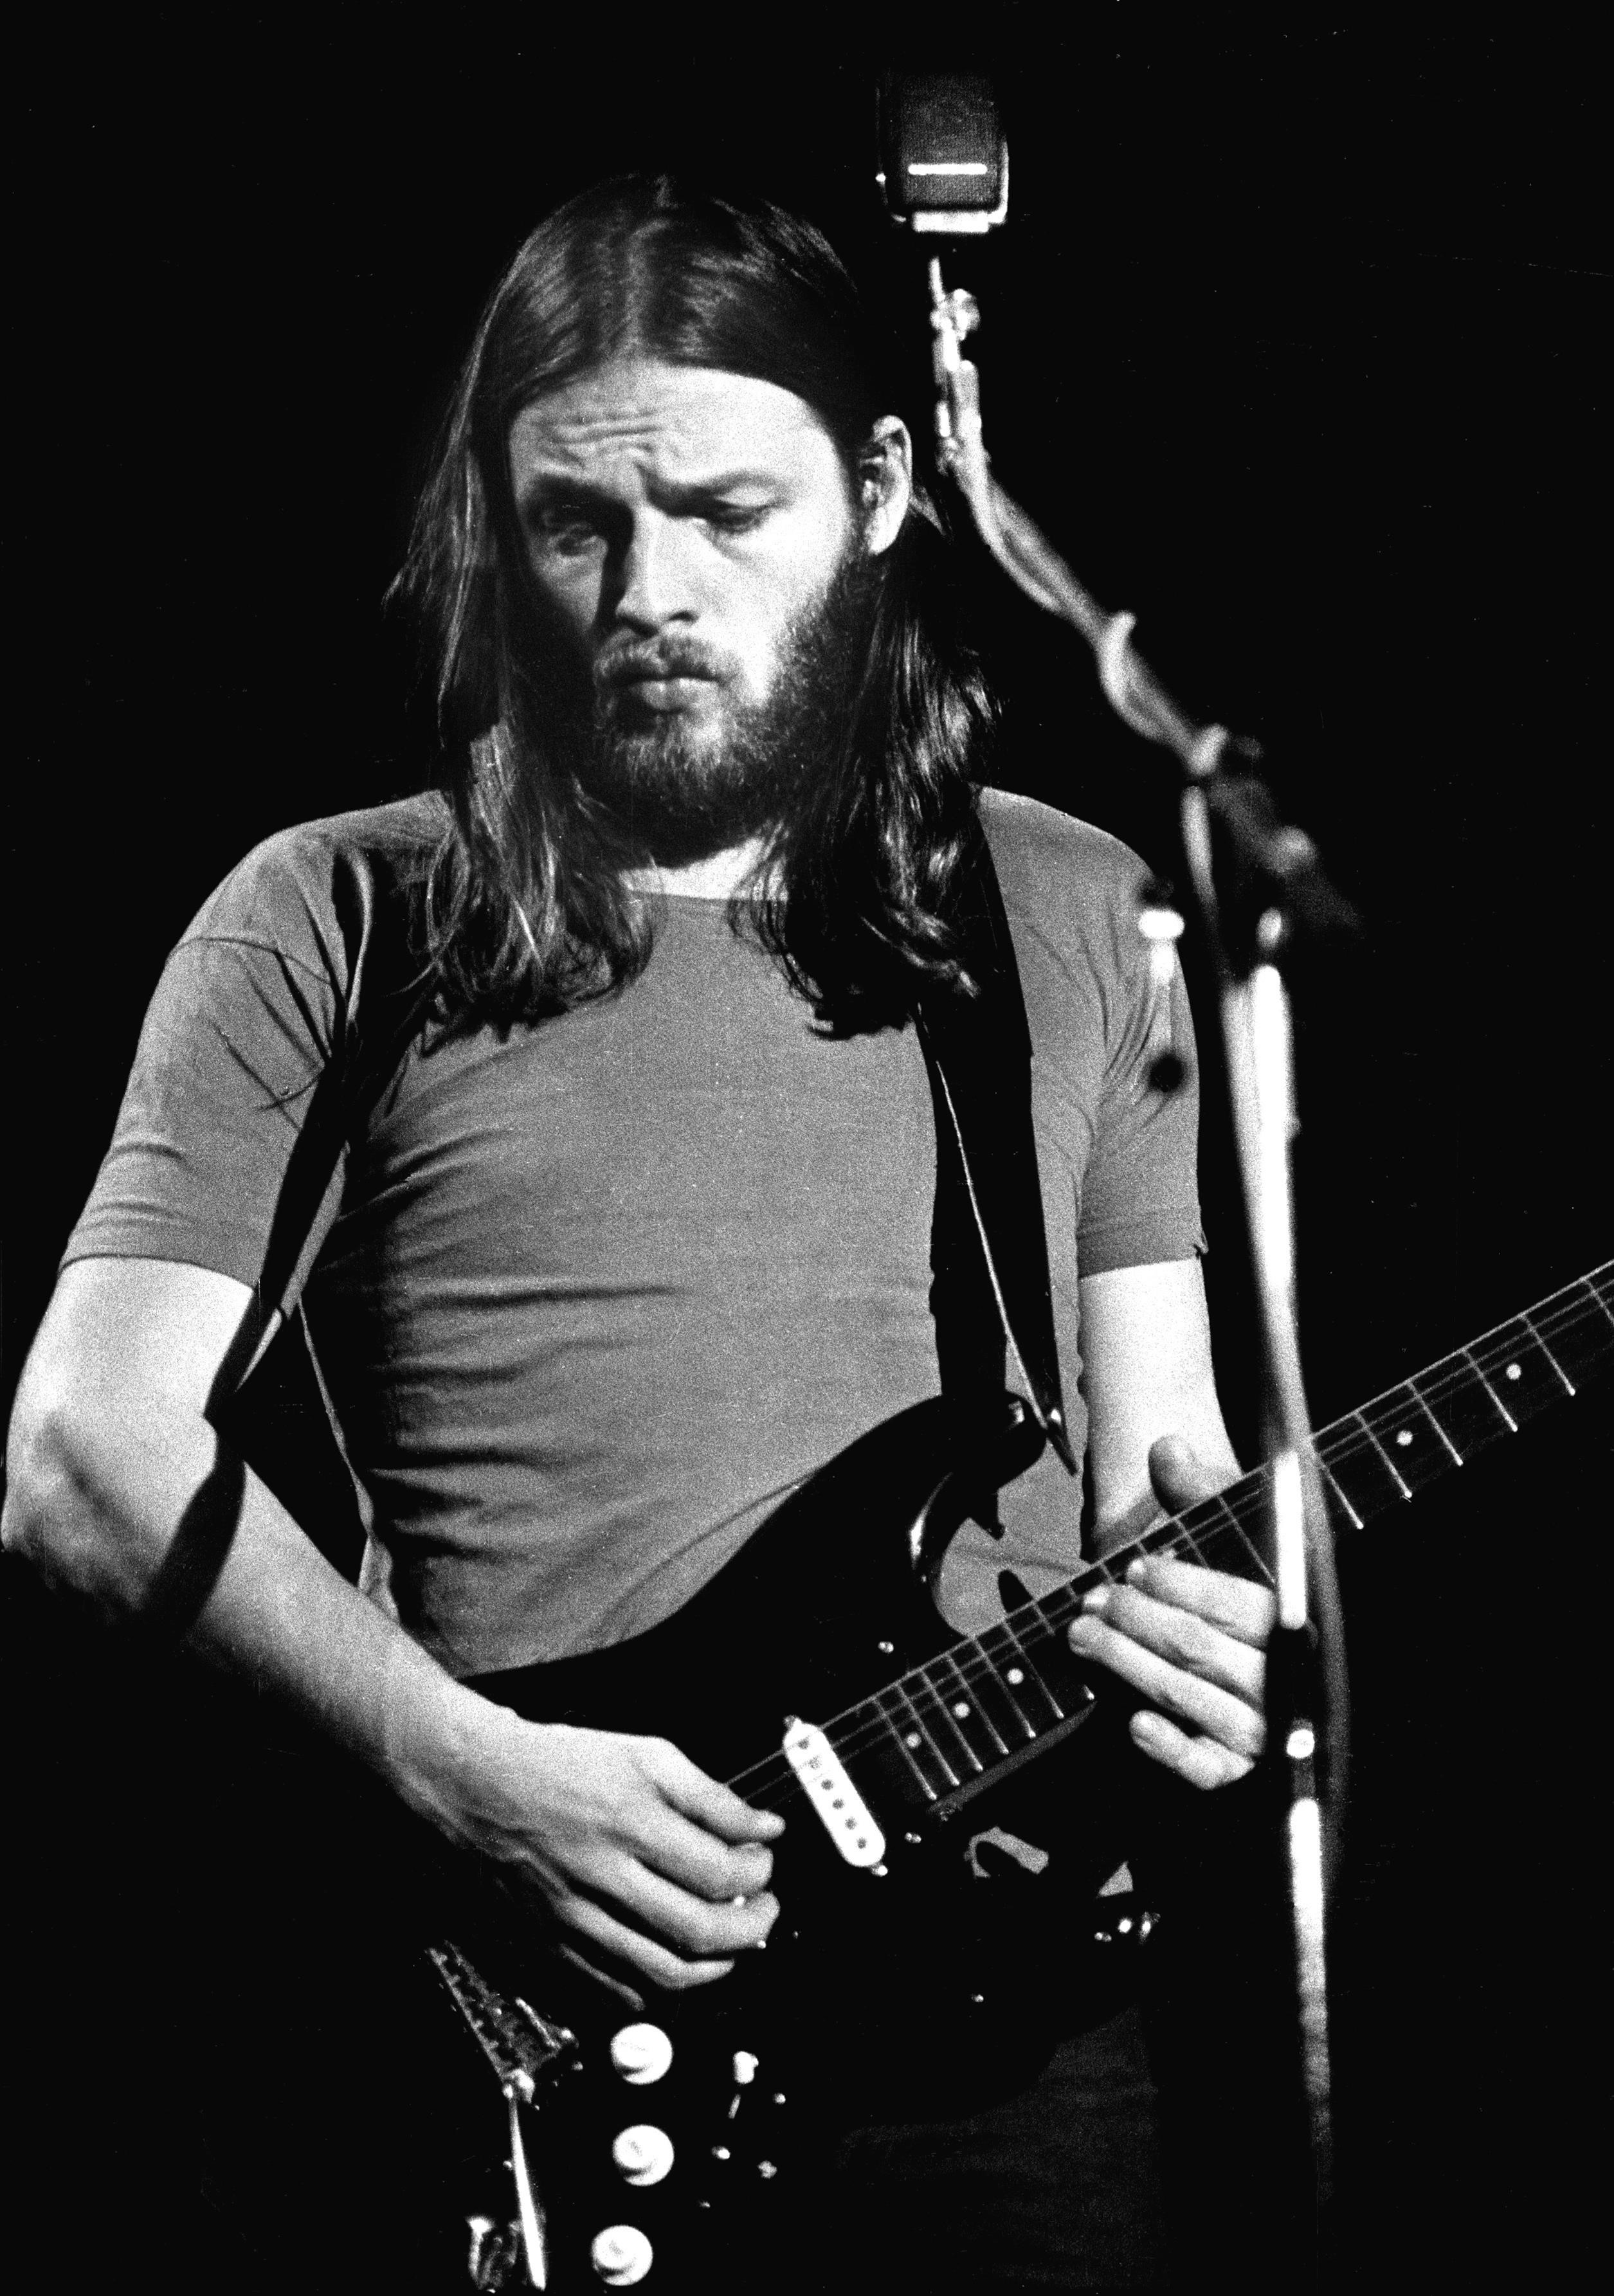 Best HD Photos Wallpaper Pics Of David Gilmour